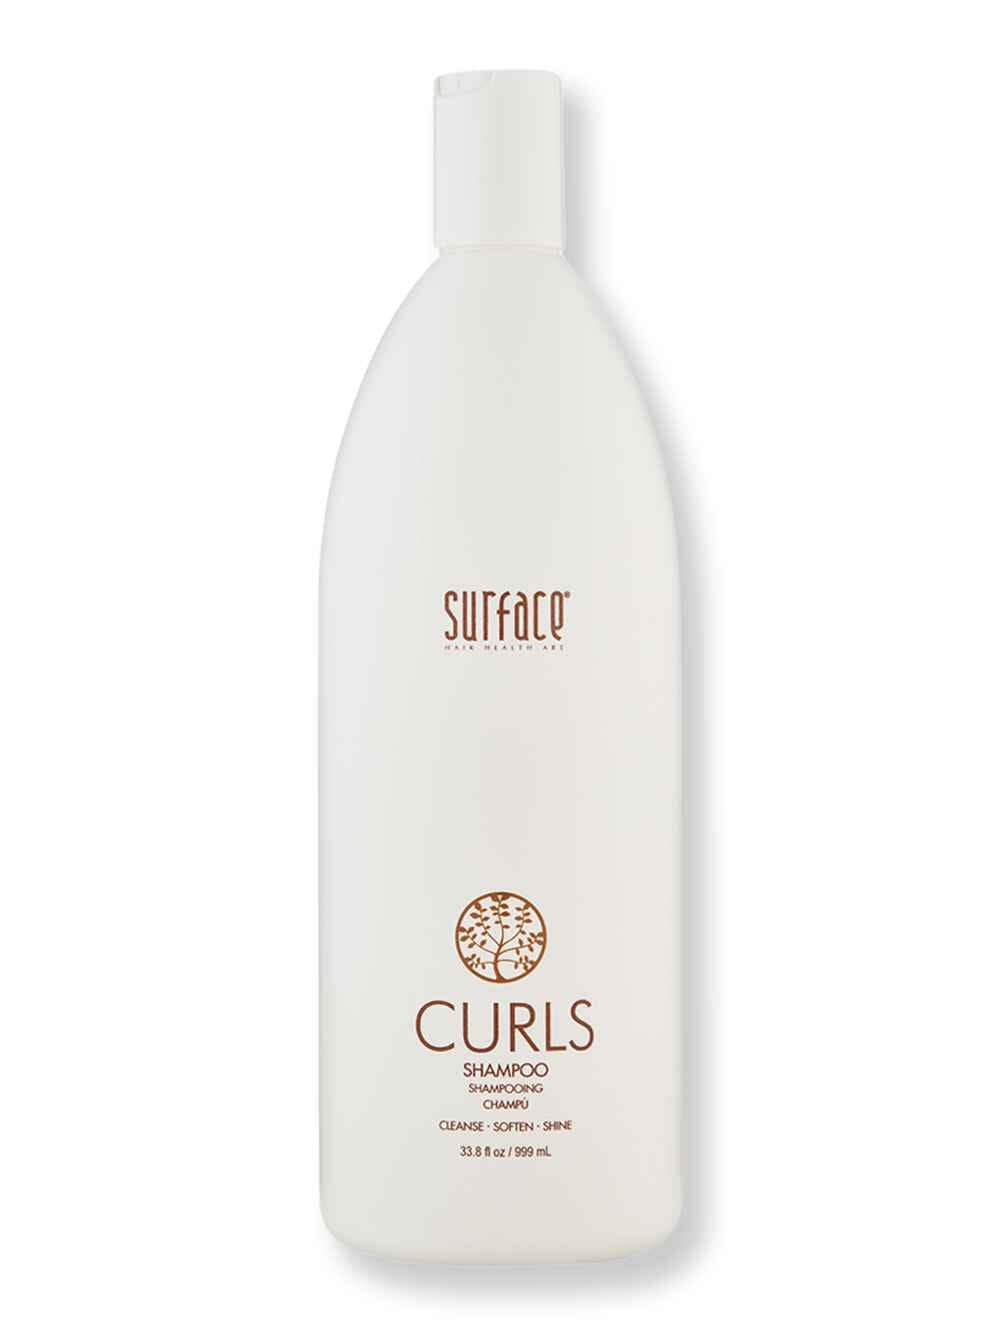 Surface Surface Curls Shampoo 1 L Shampoos 